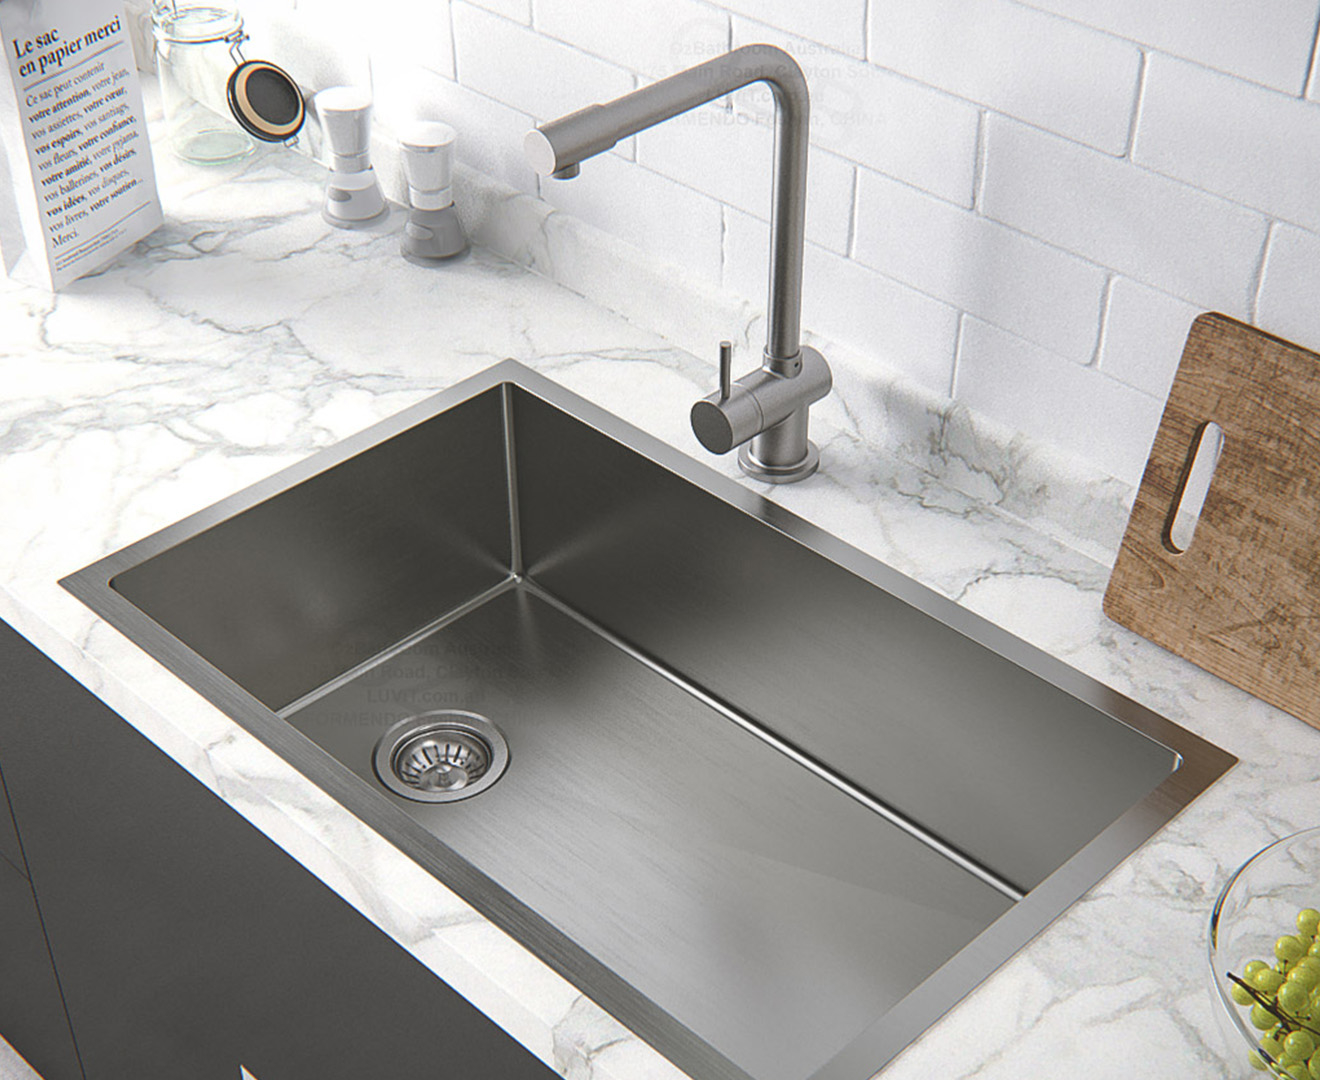 type 316 stainless steel kitchen sink